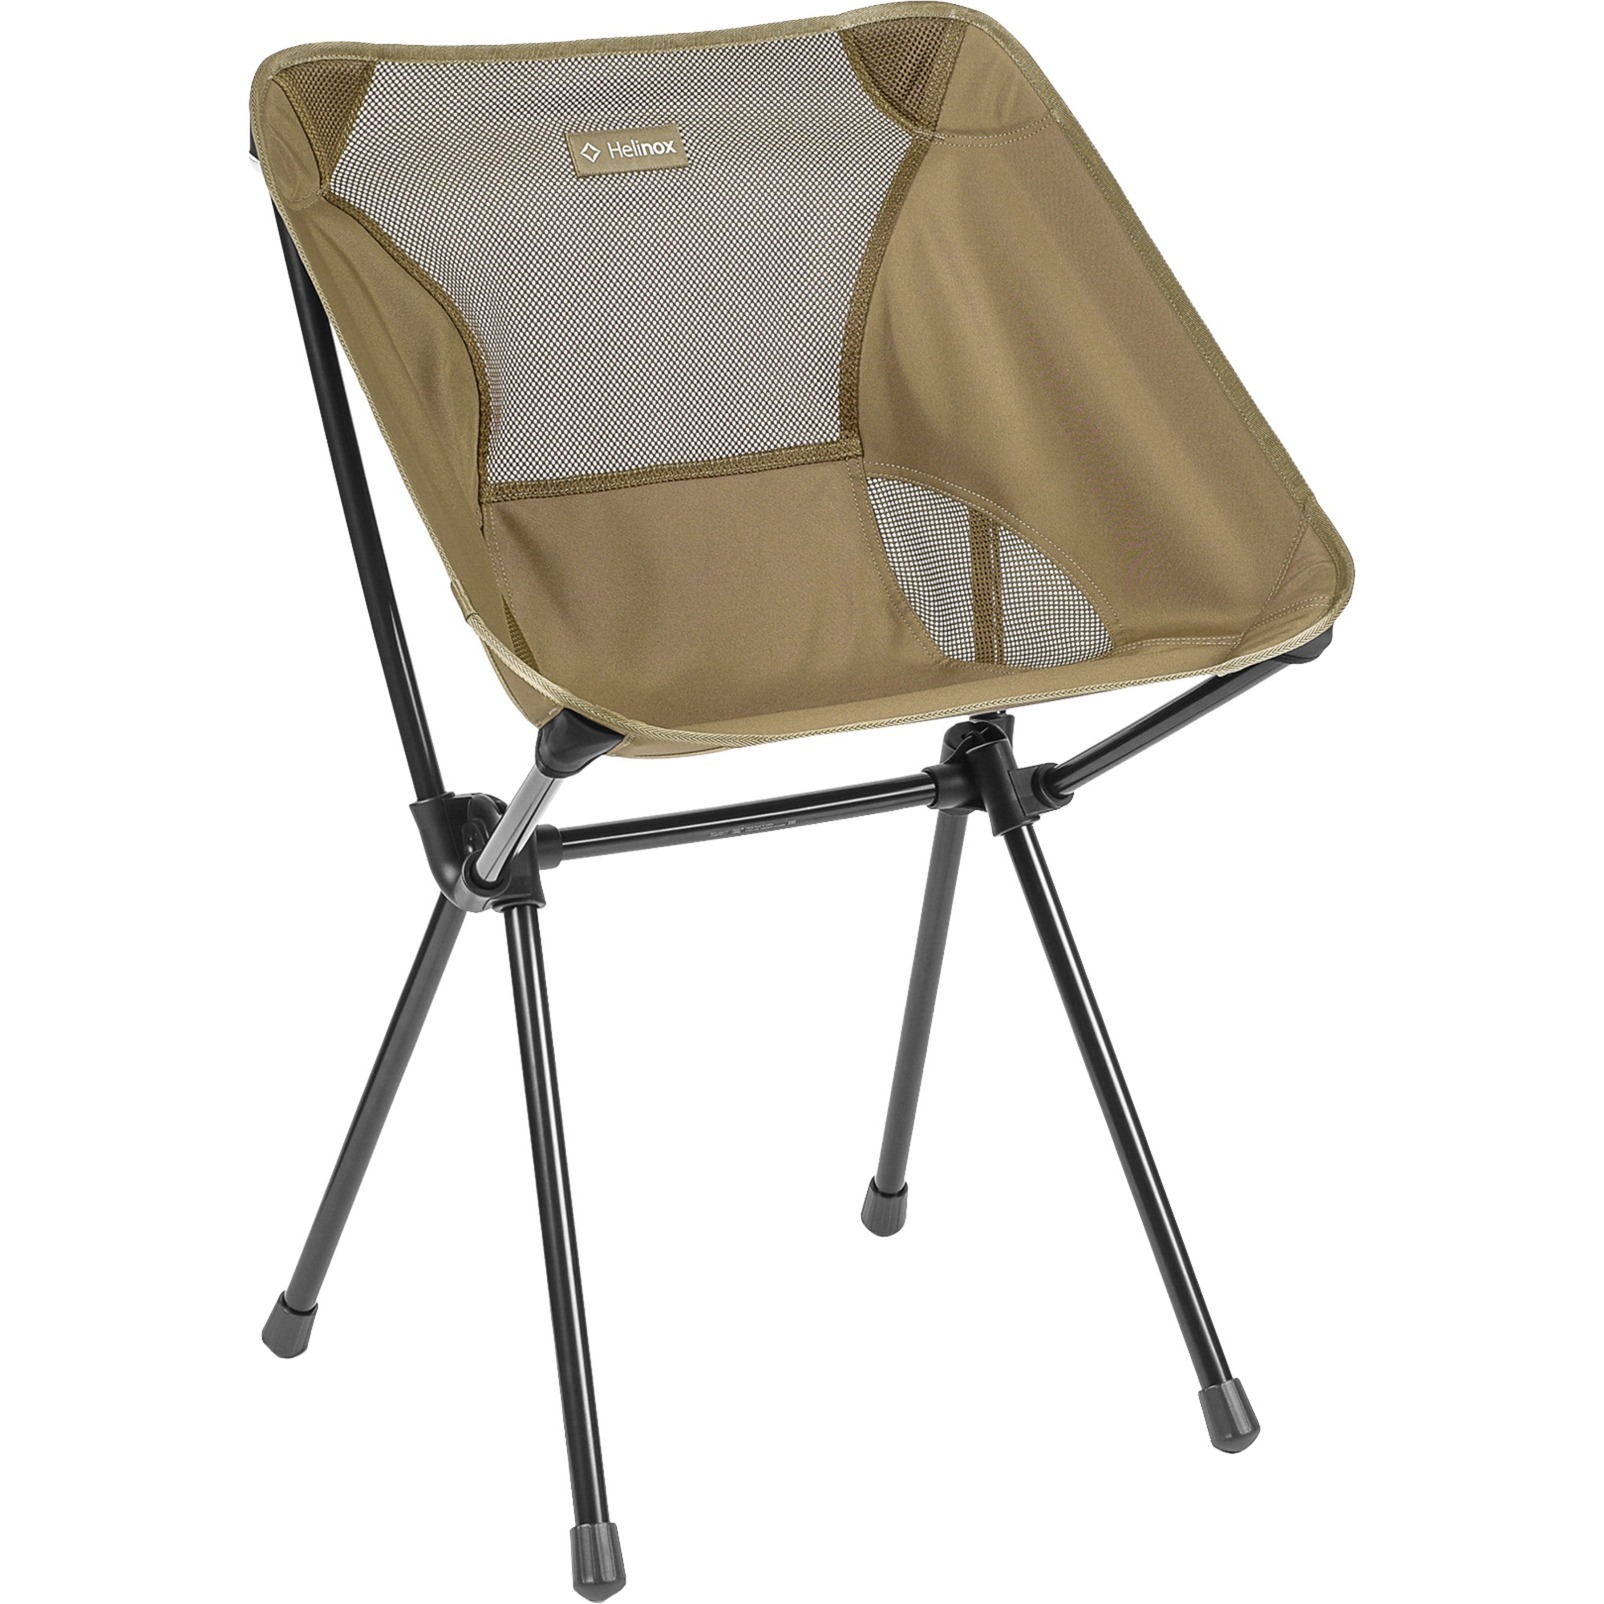 Café Chair 14360, Camping-Stuhl von Helinox